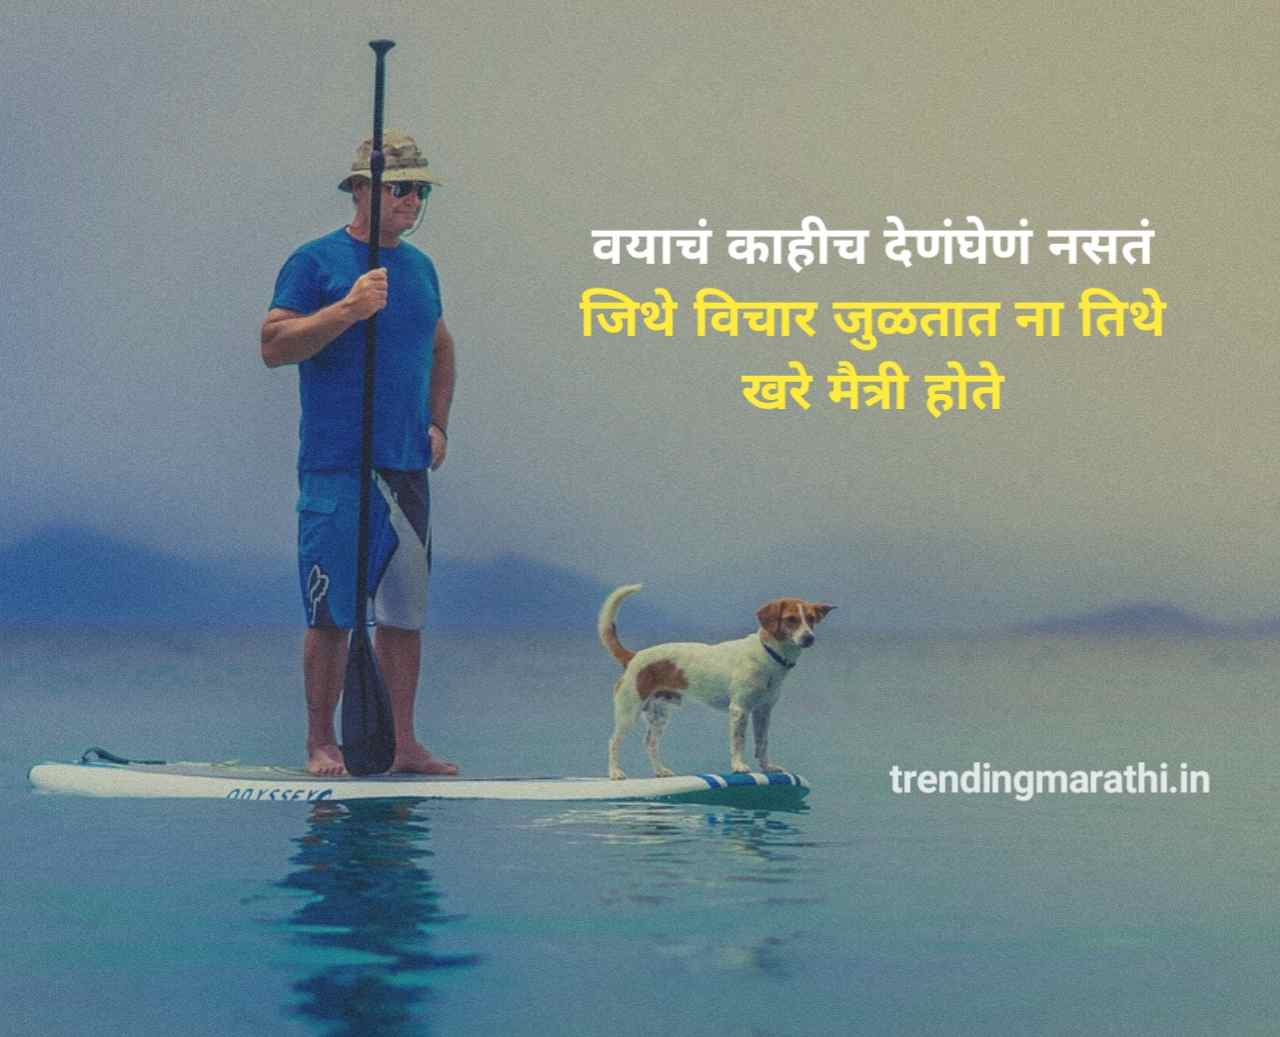 Best Friendship Quotes in Marathi - TrendingMarathi.in